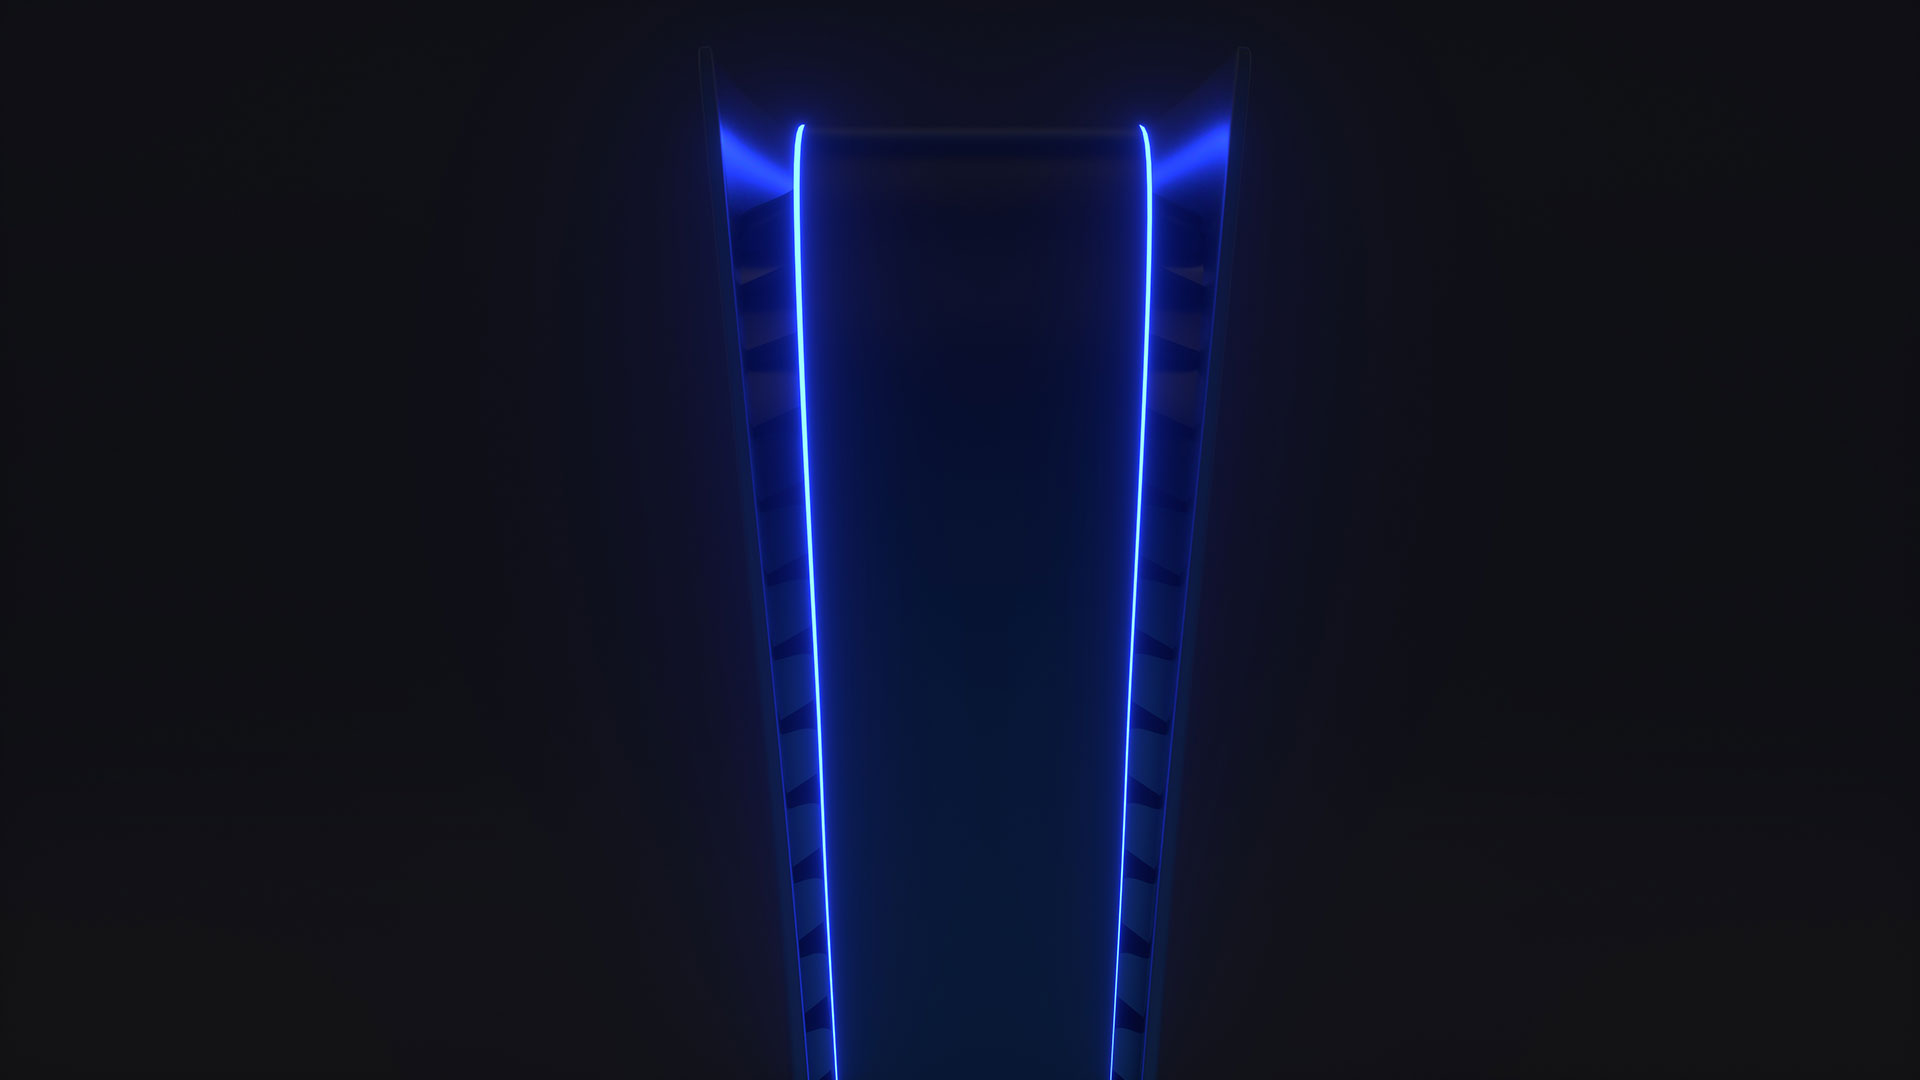 PS5 blue light in the dark